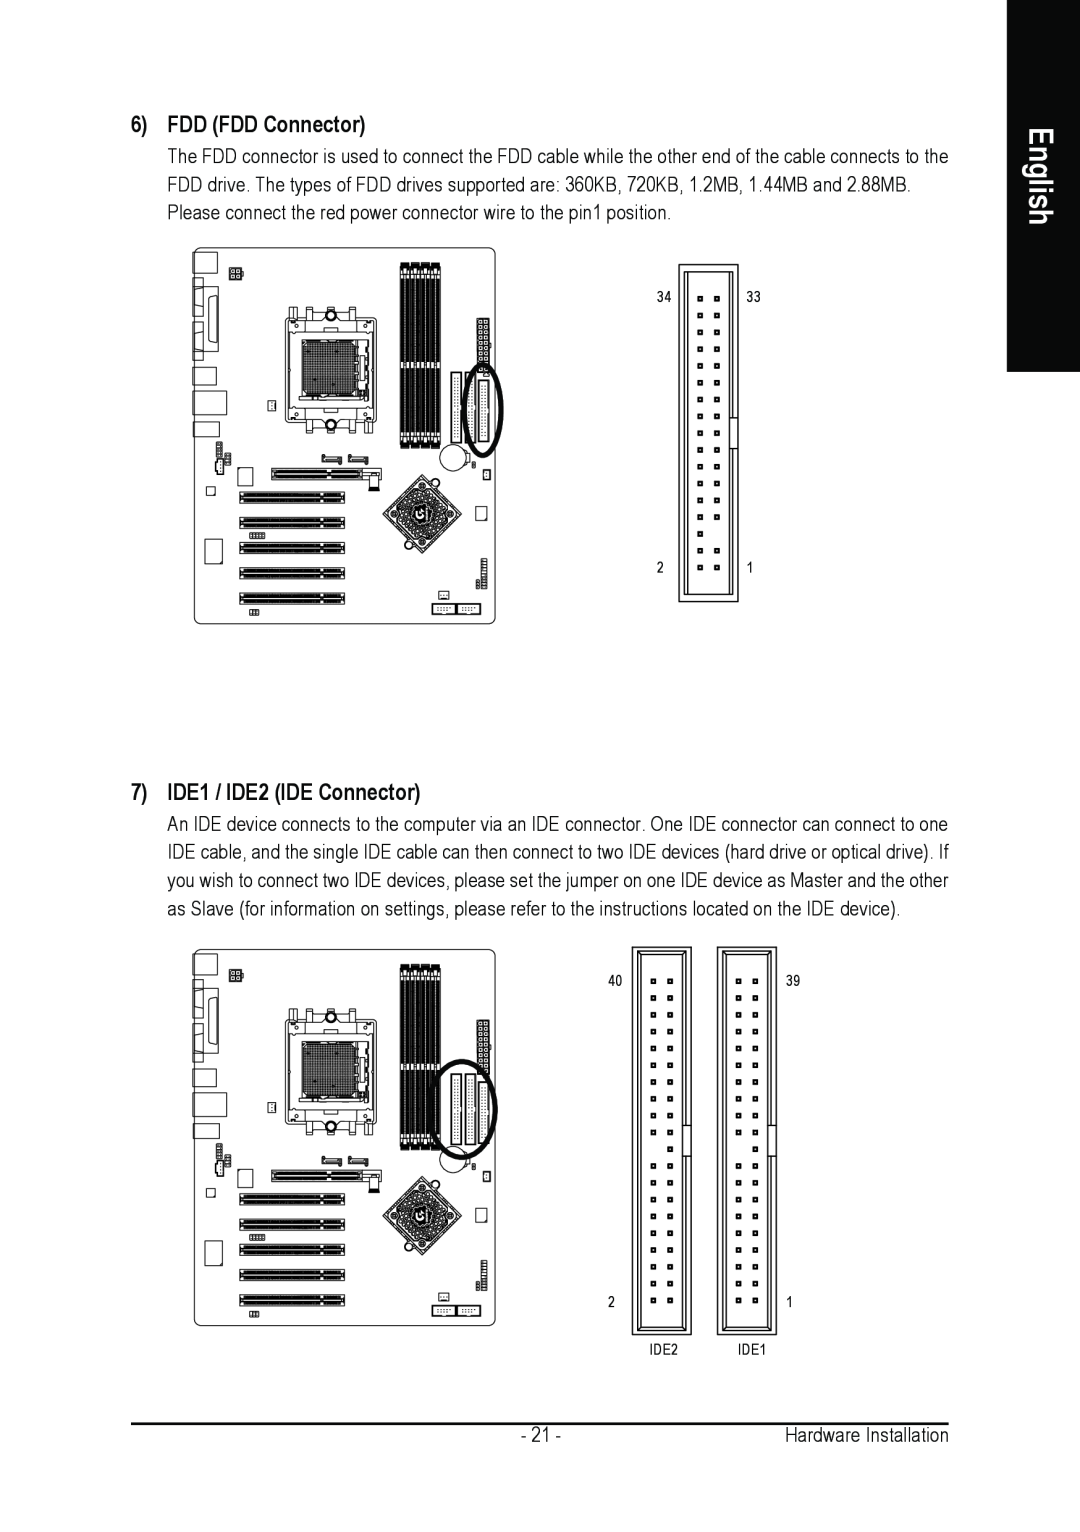 AMD GA-K8NSC-939 user manual FDD FDD Connector, 7 IDE1 / IDE2 IDE Connector, English 